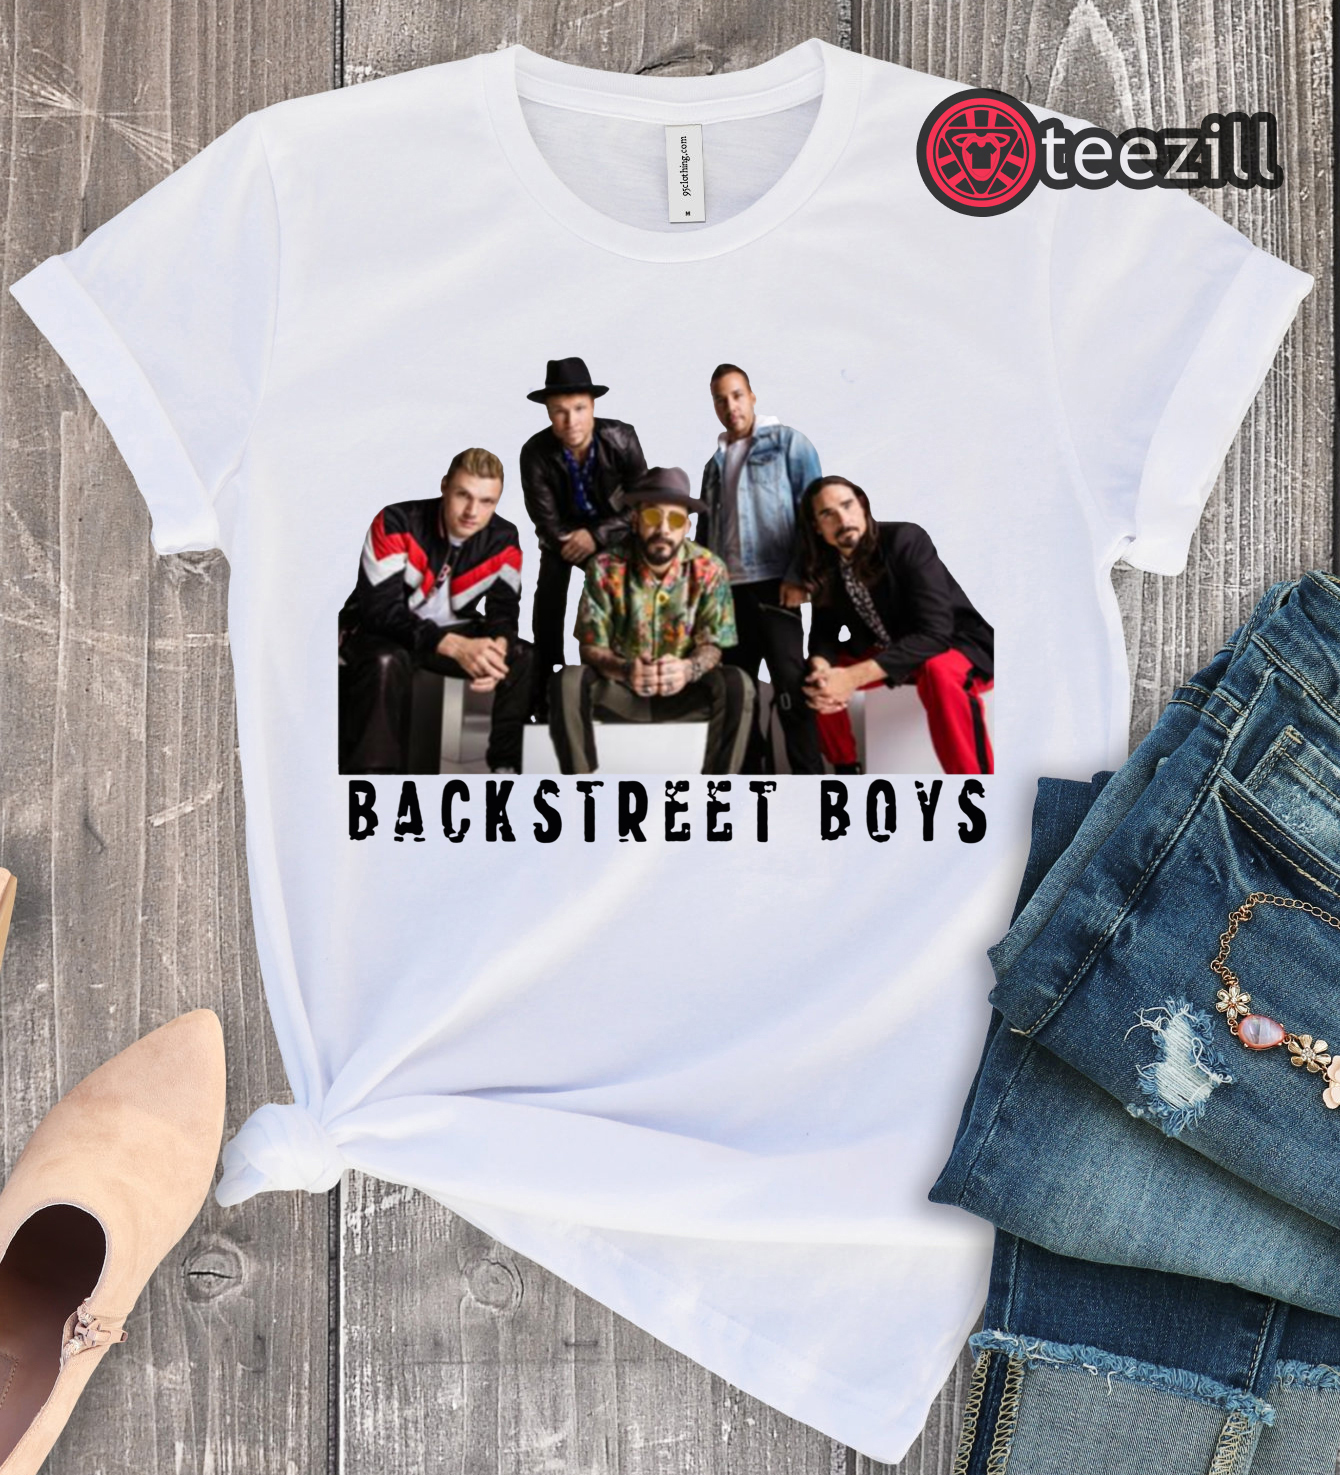 backstreet boys shirt